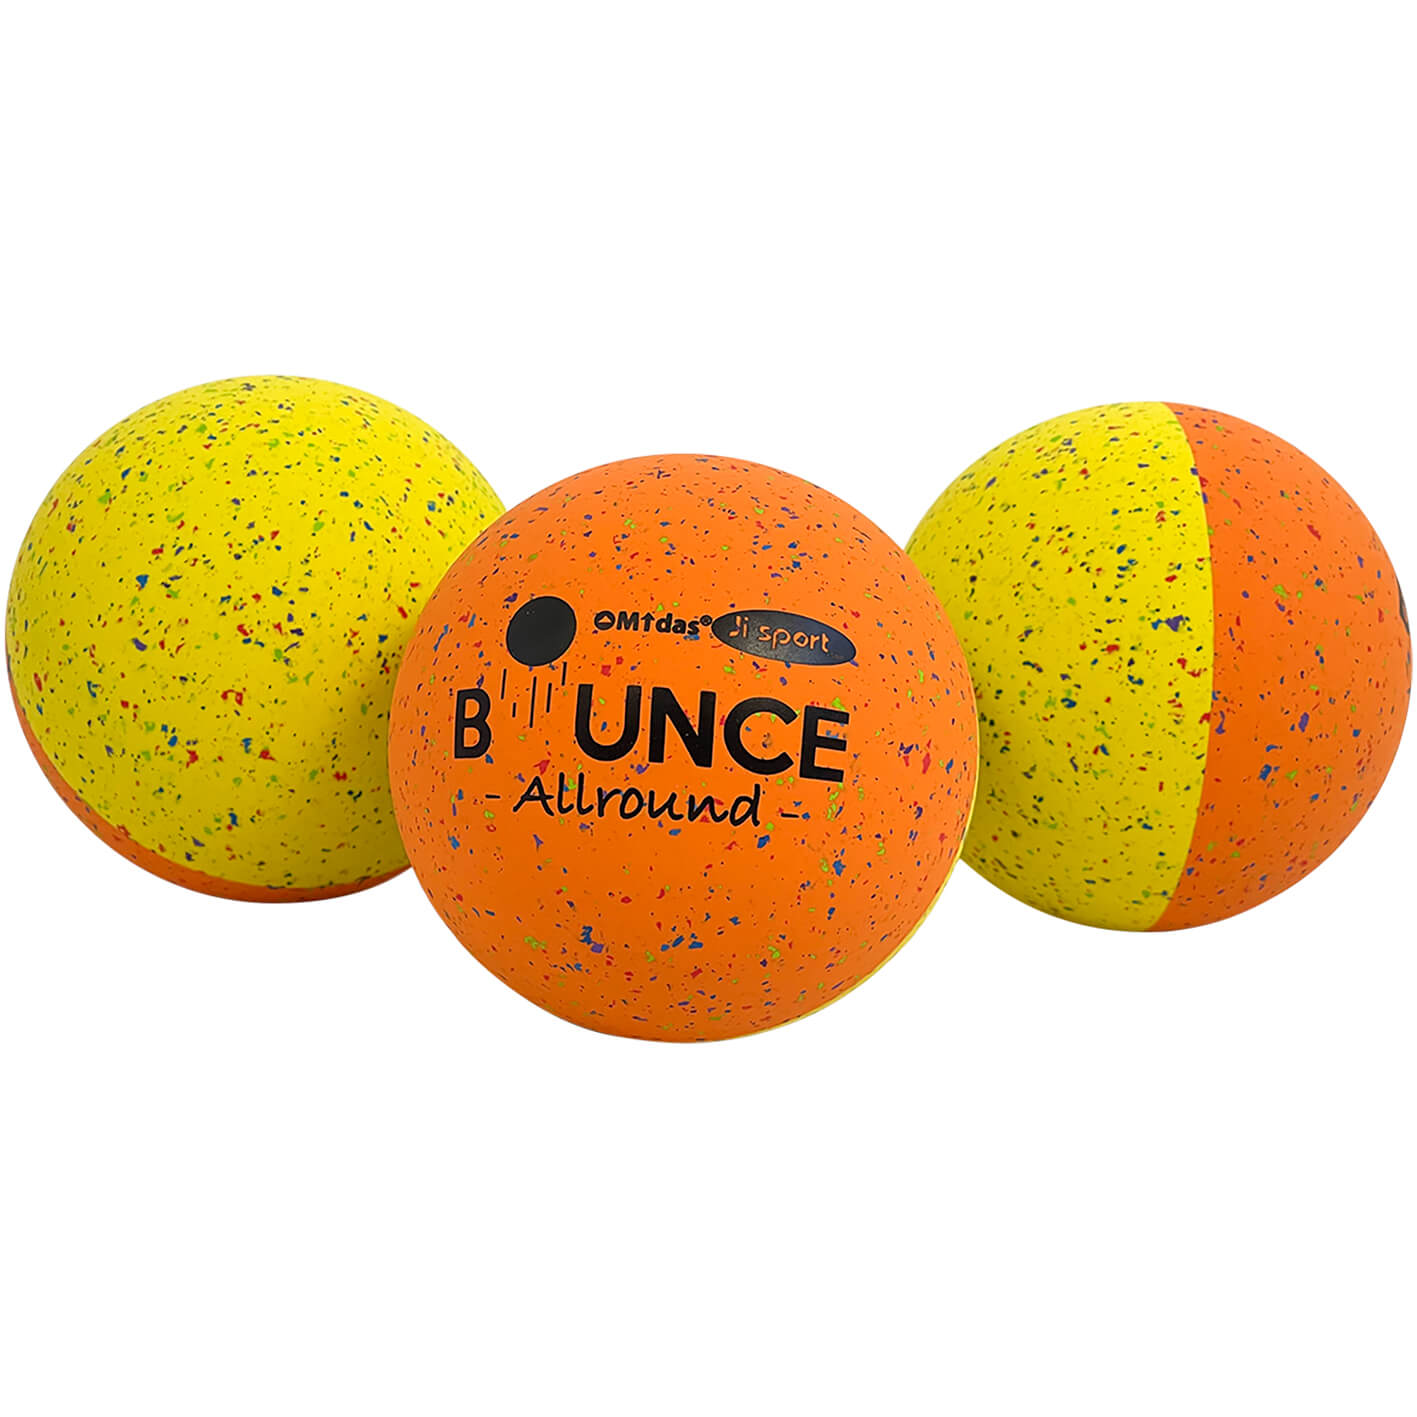 Bounce Allround ball